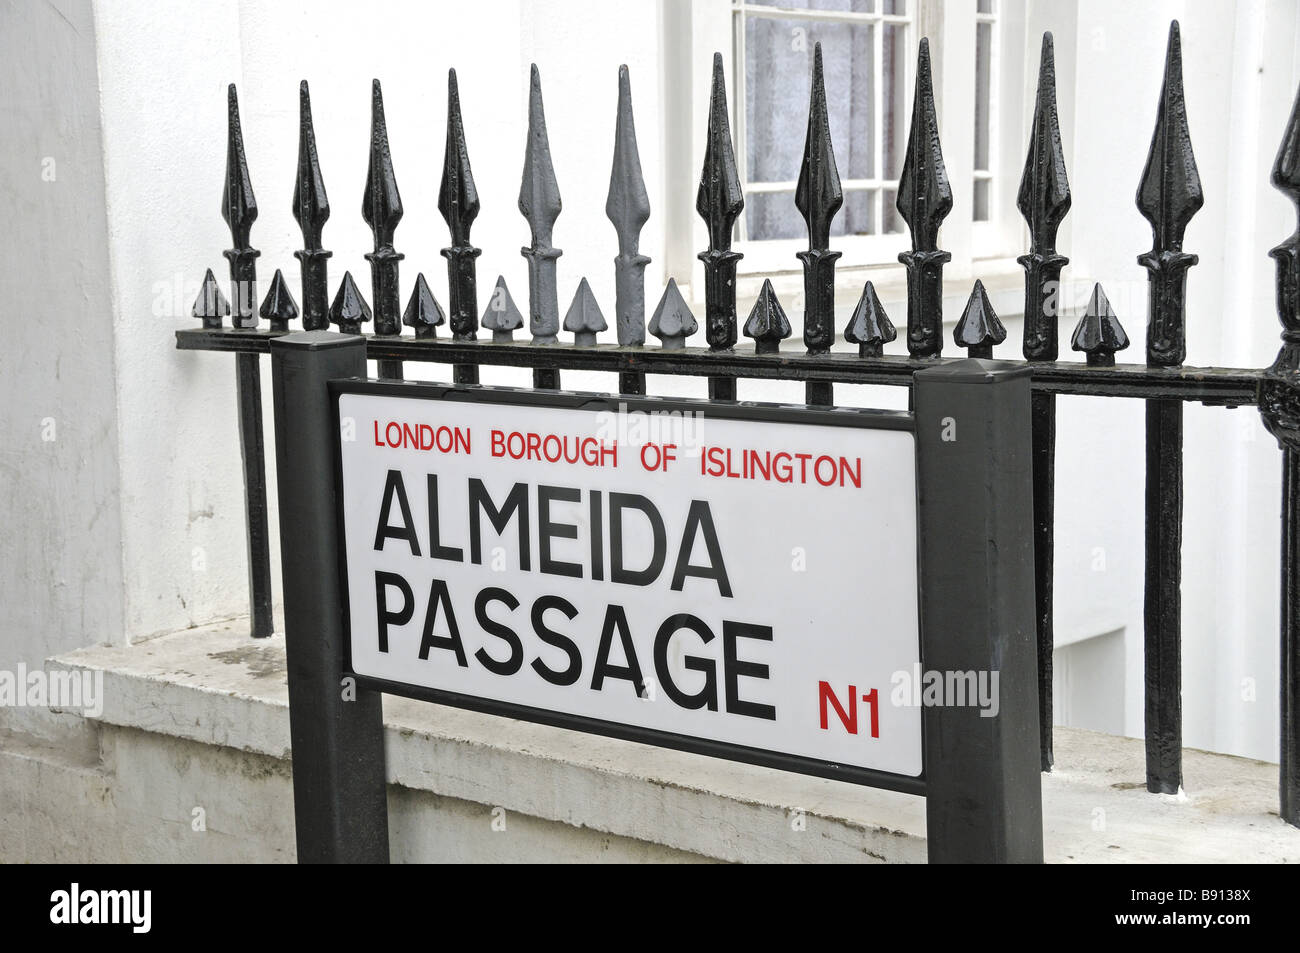 Almeida Passage street sign London Borough of Islington N1 England UK Stock Photo